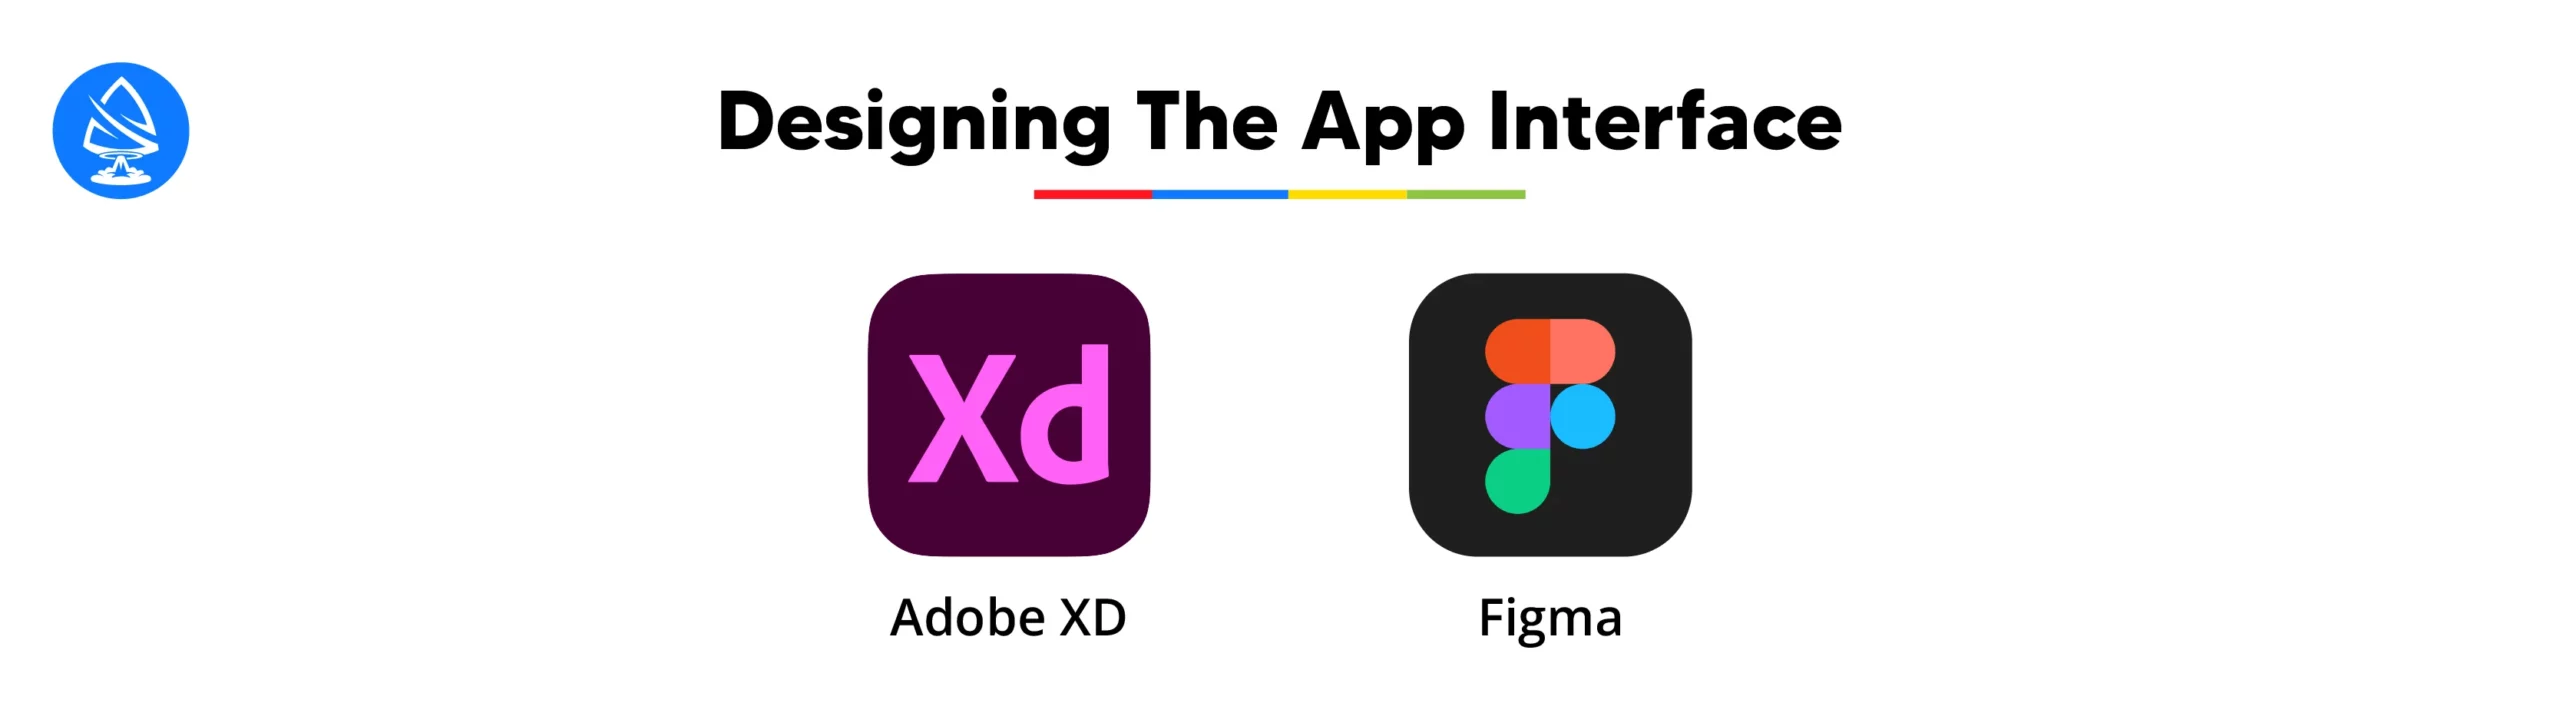 Designing The App Interface